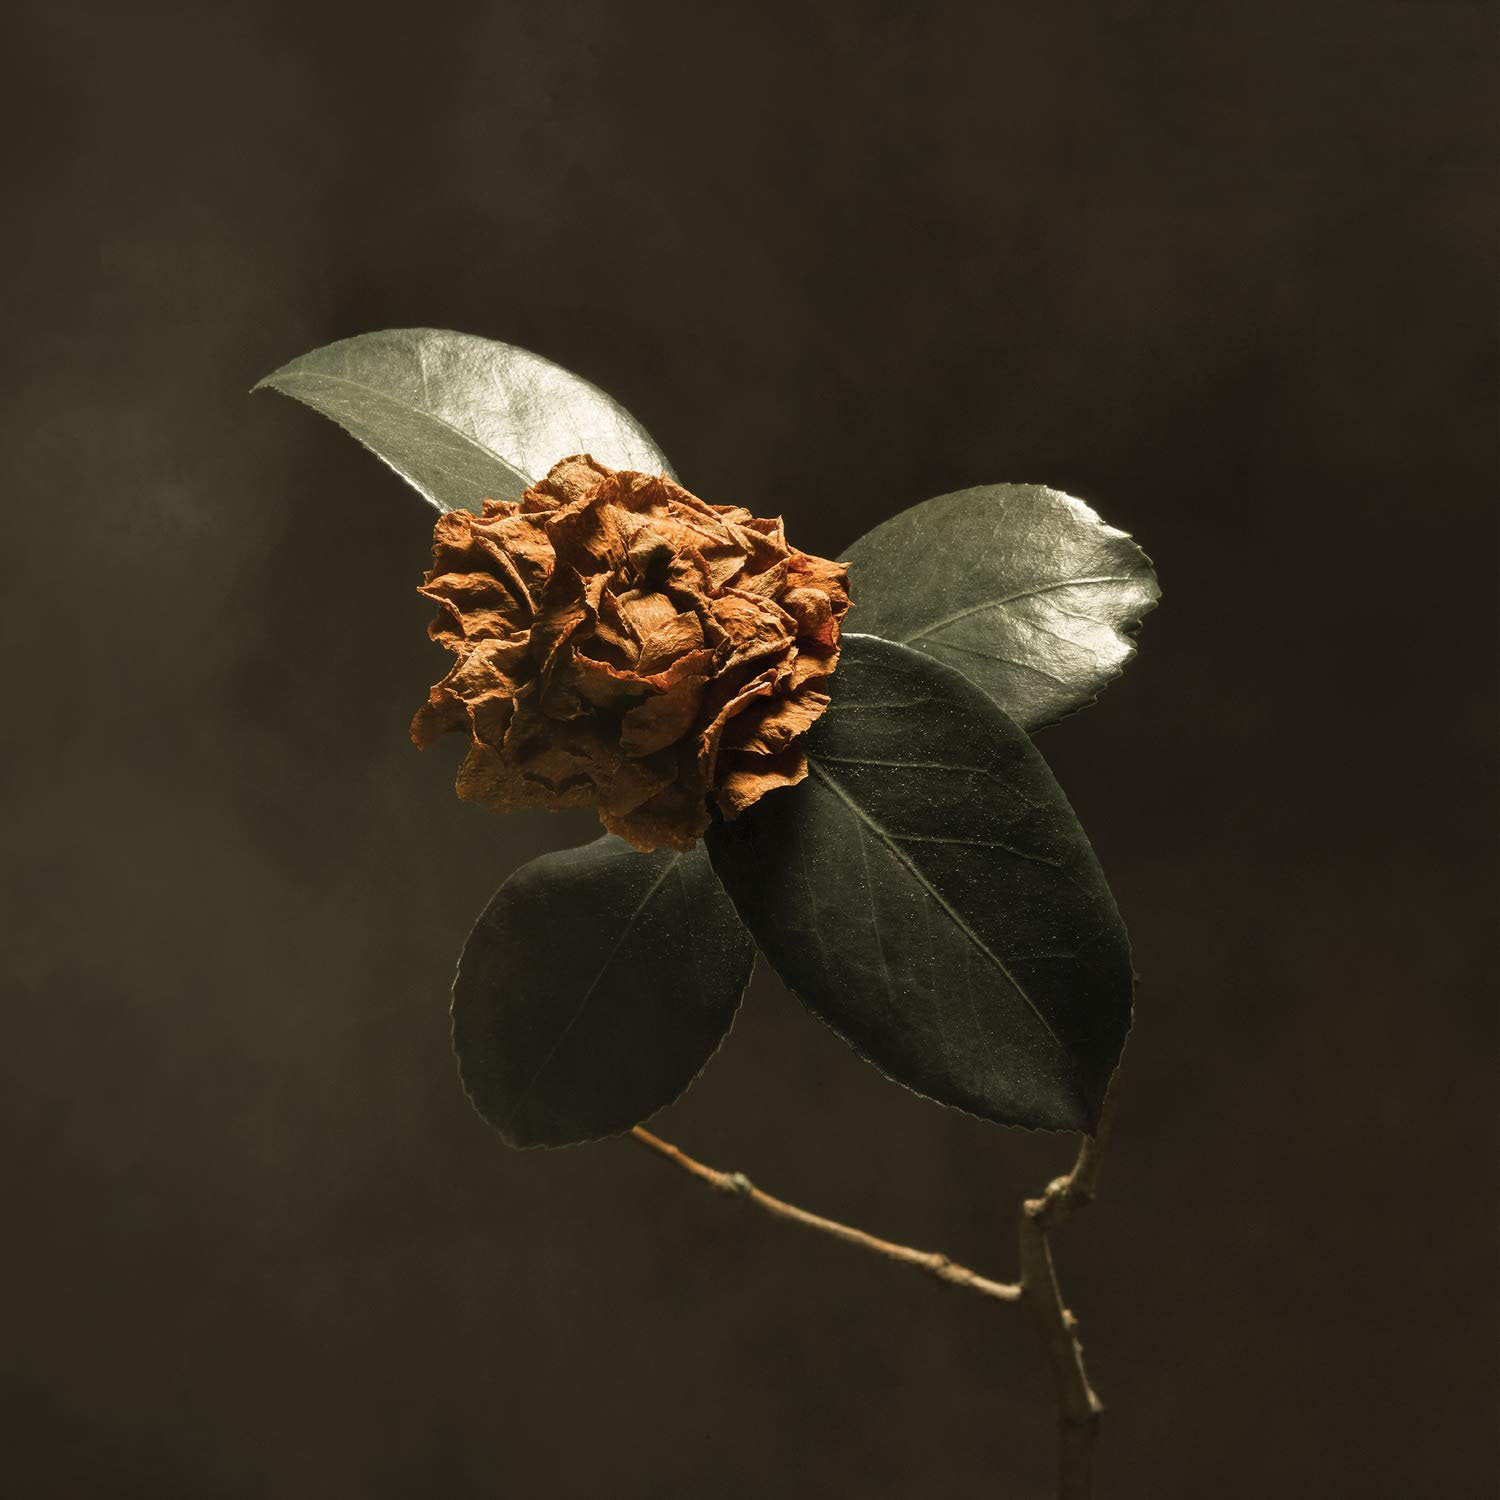 St Paul and the Broken Bones - Young, Sick Camellia - Album Cover